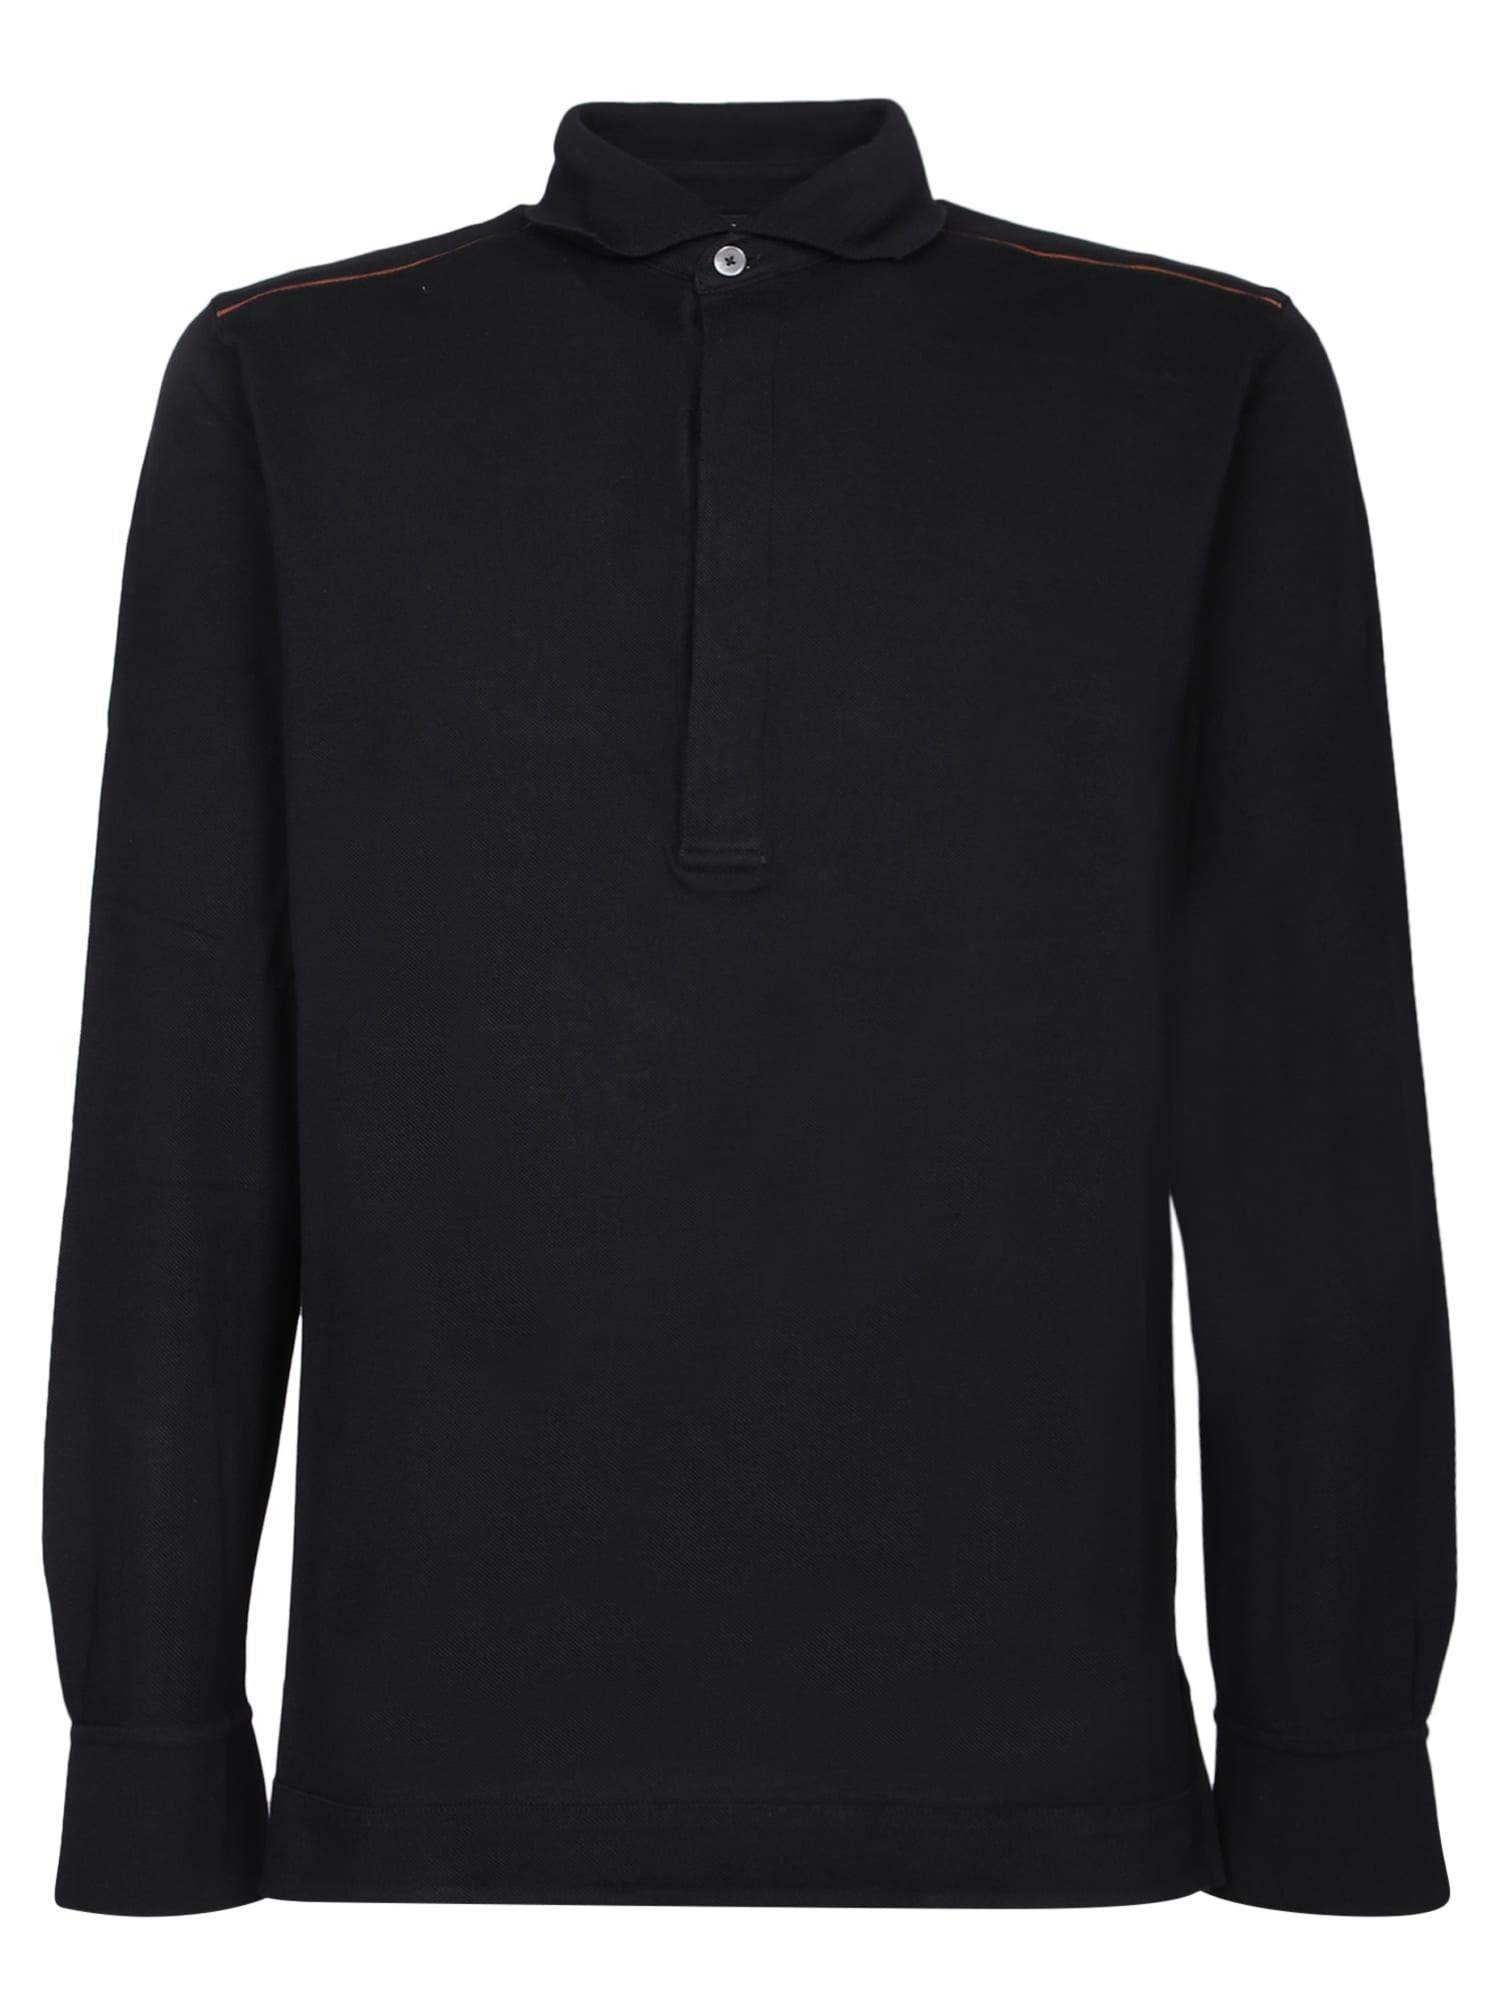 Zegna Black Cotton Polo Shirt